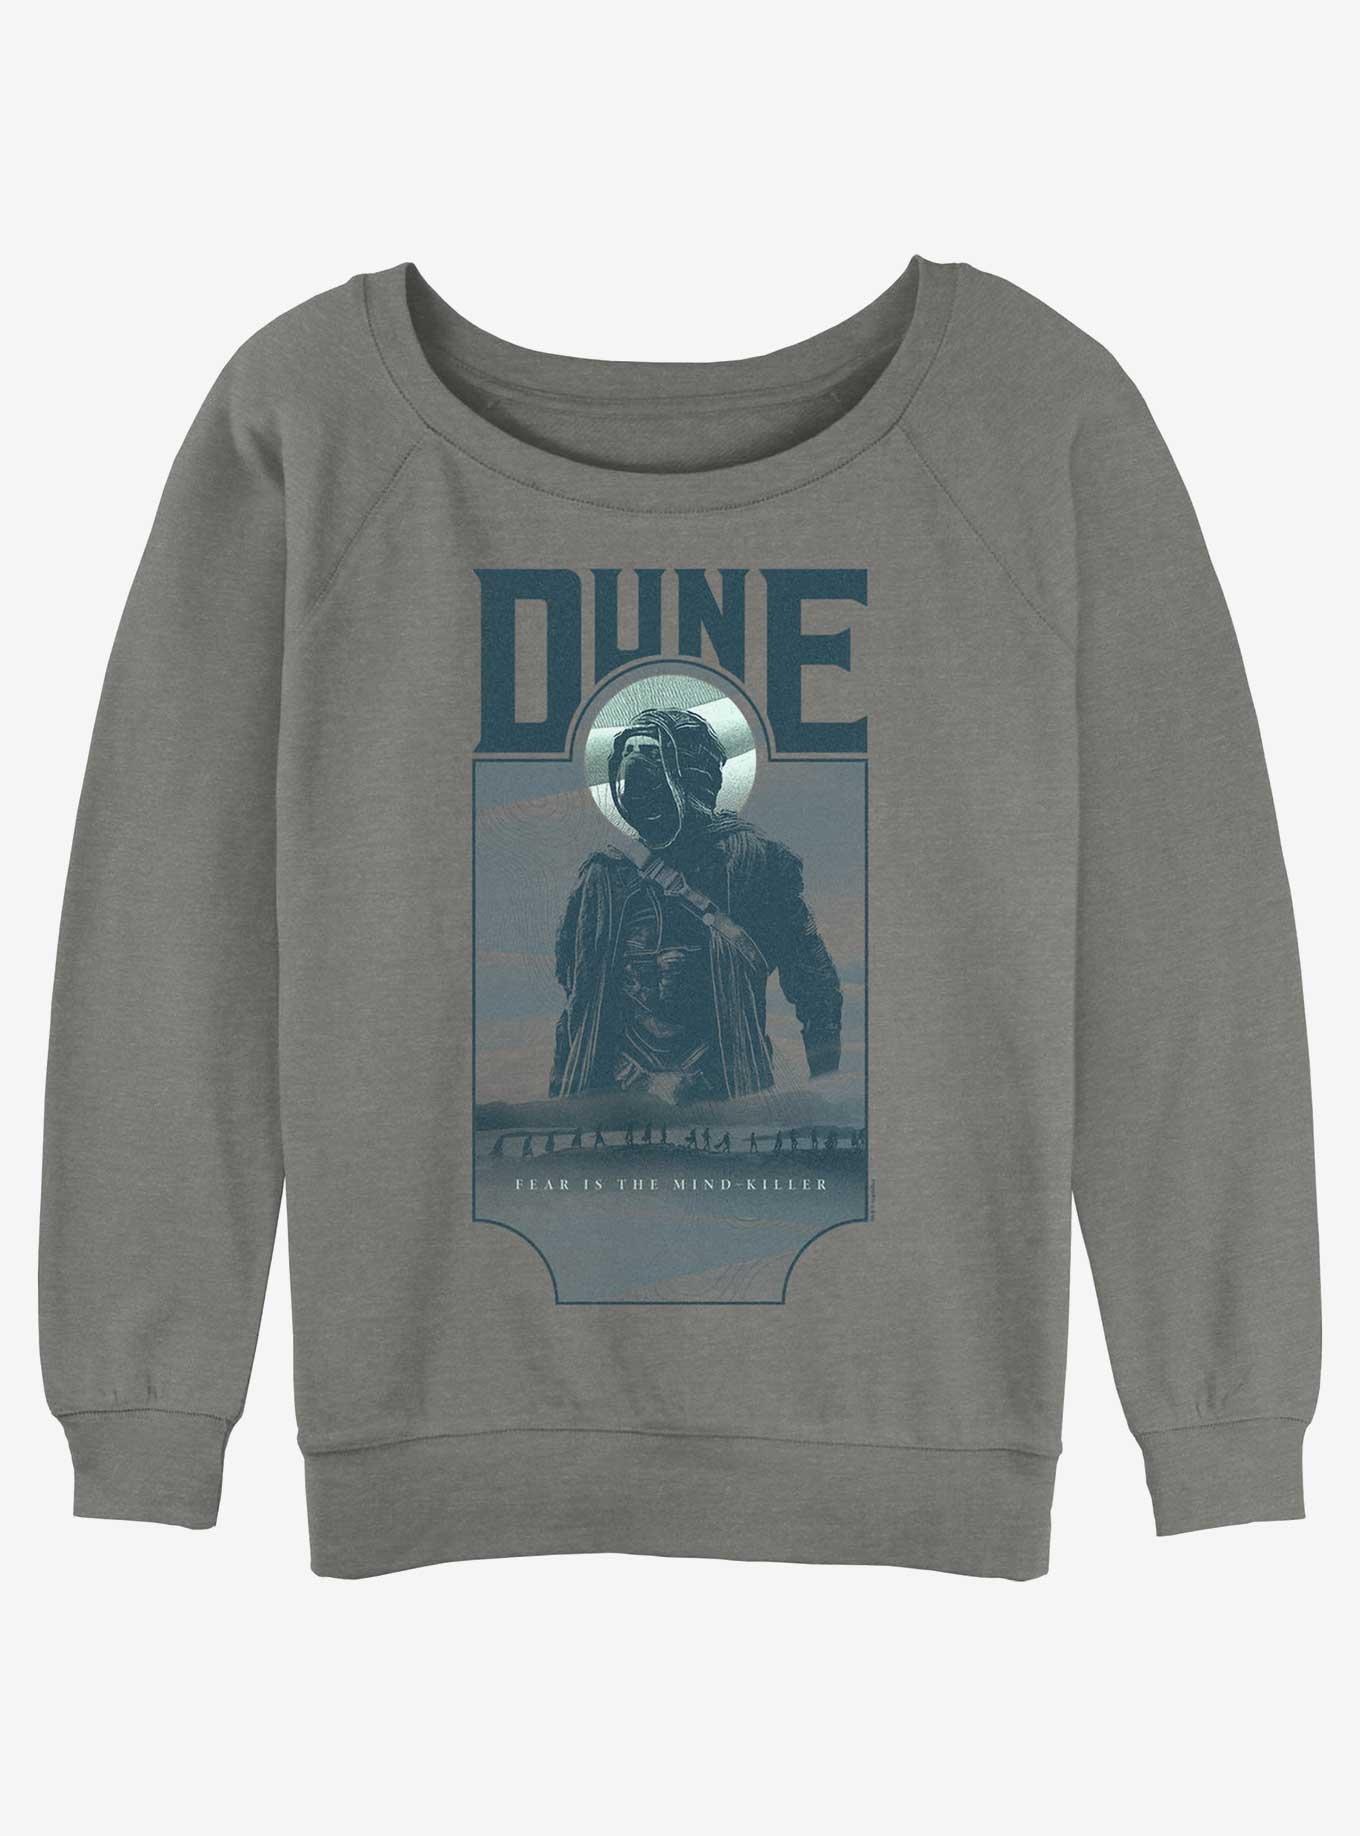 Dune Paul Of Arrakis Womens Slouchy Sweatshirt, GRAY HTR, hi-res